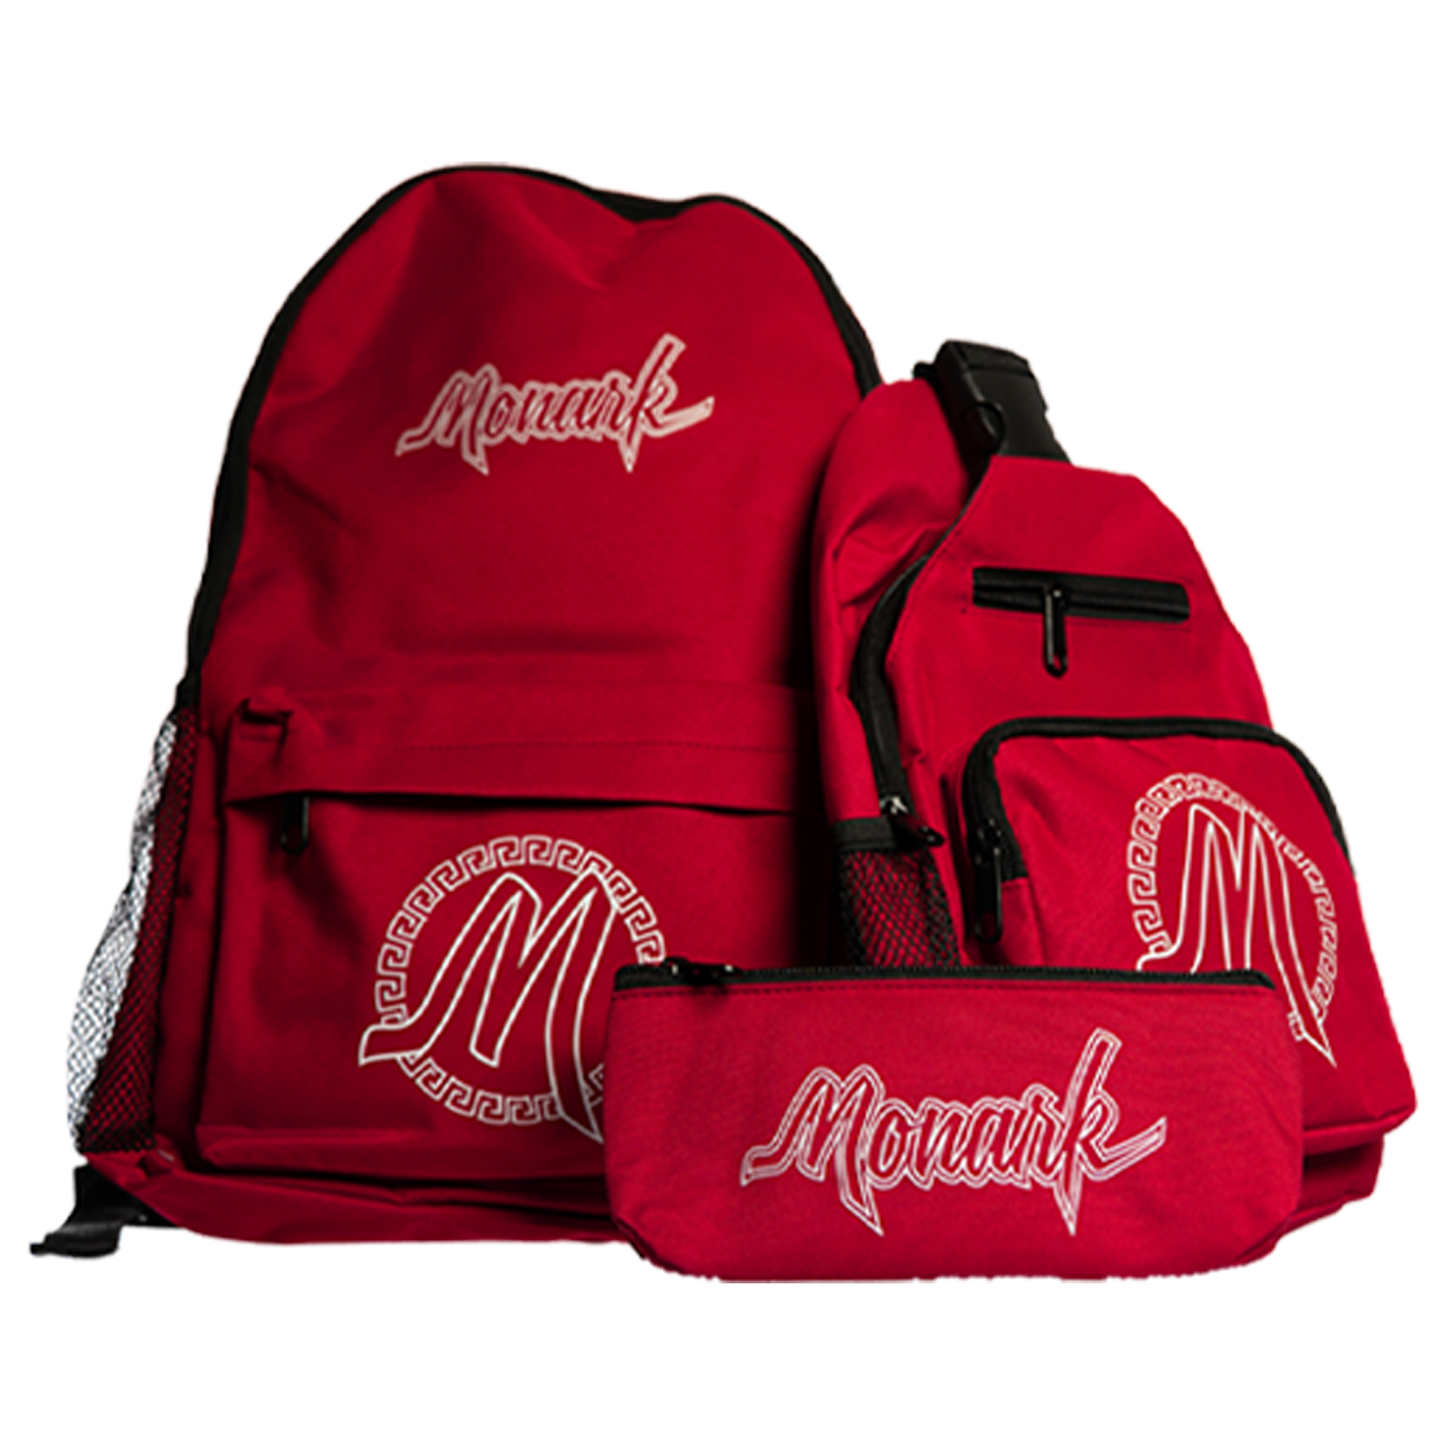 Red Monark Backpack w/ Red Shoulder Bag & Red Pouch